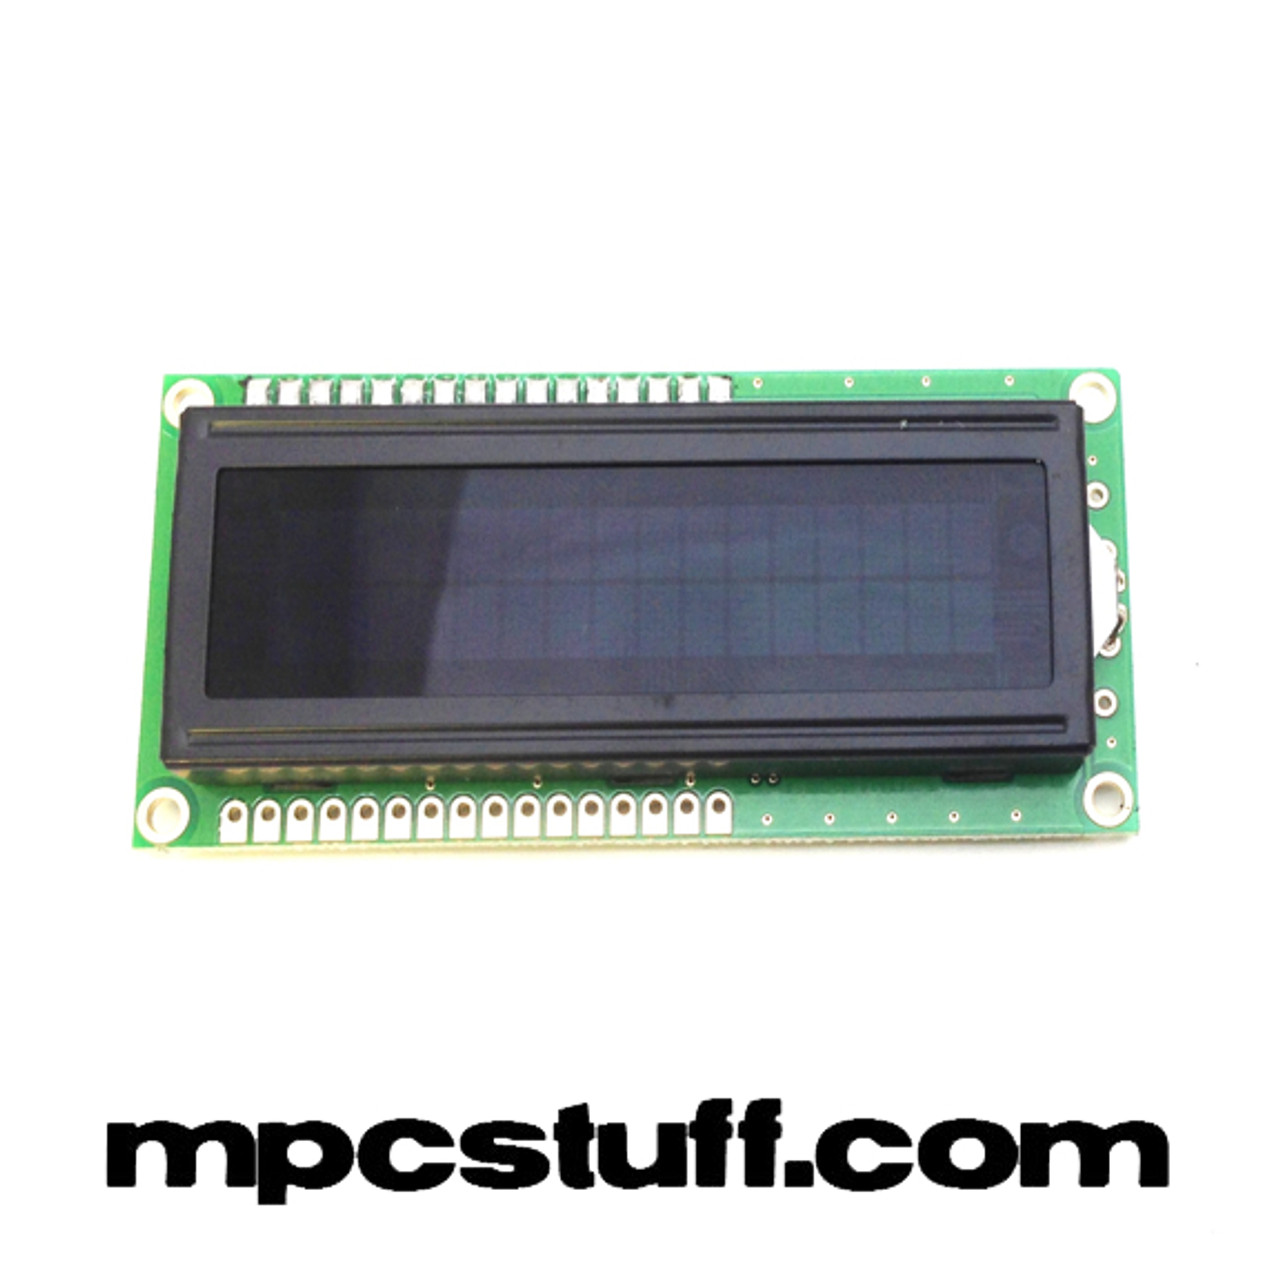 Akai MPC4000 LCD Blue on White display Plug & Play Easy